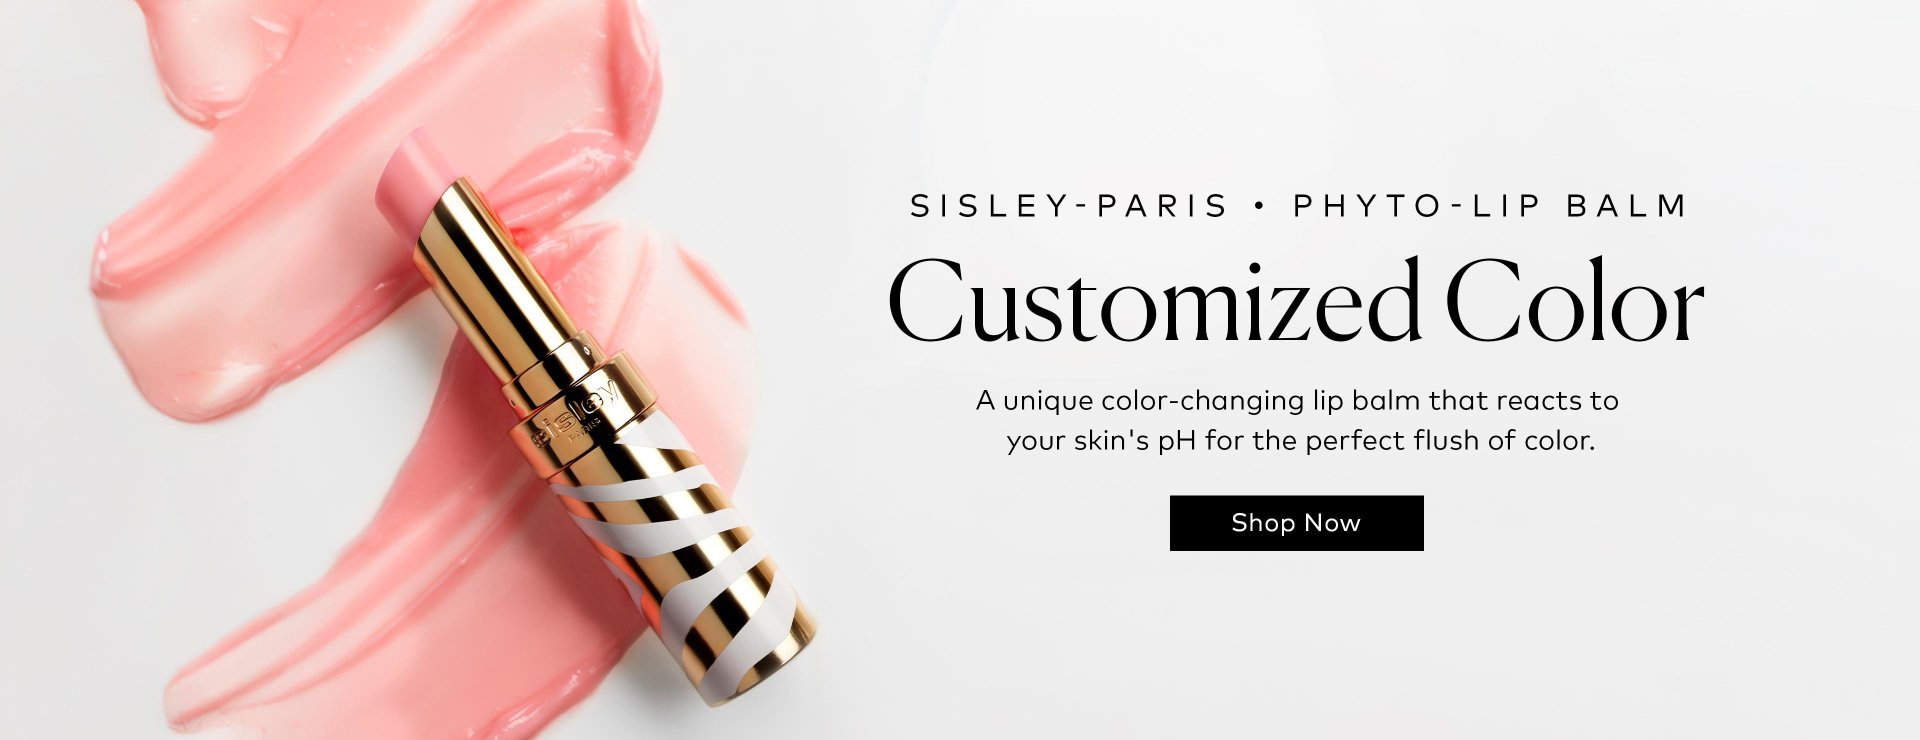 Shop the Sisley-Paris Phyto-Lip Balm - 2 Pink Glow at Beautylish.com